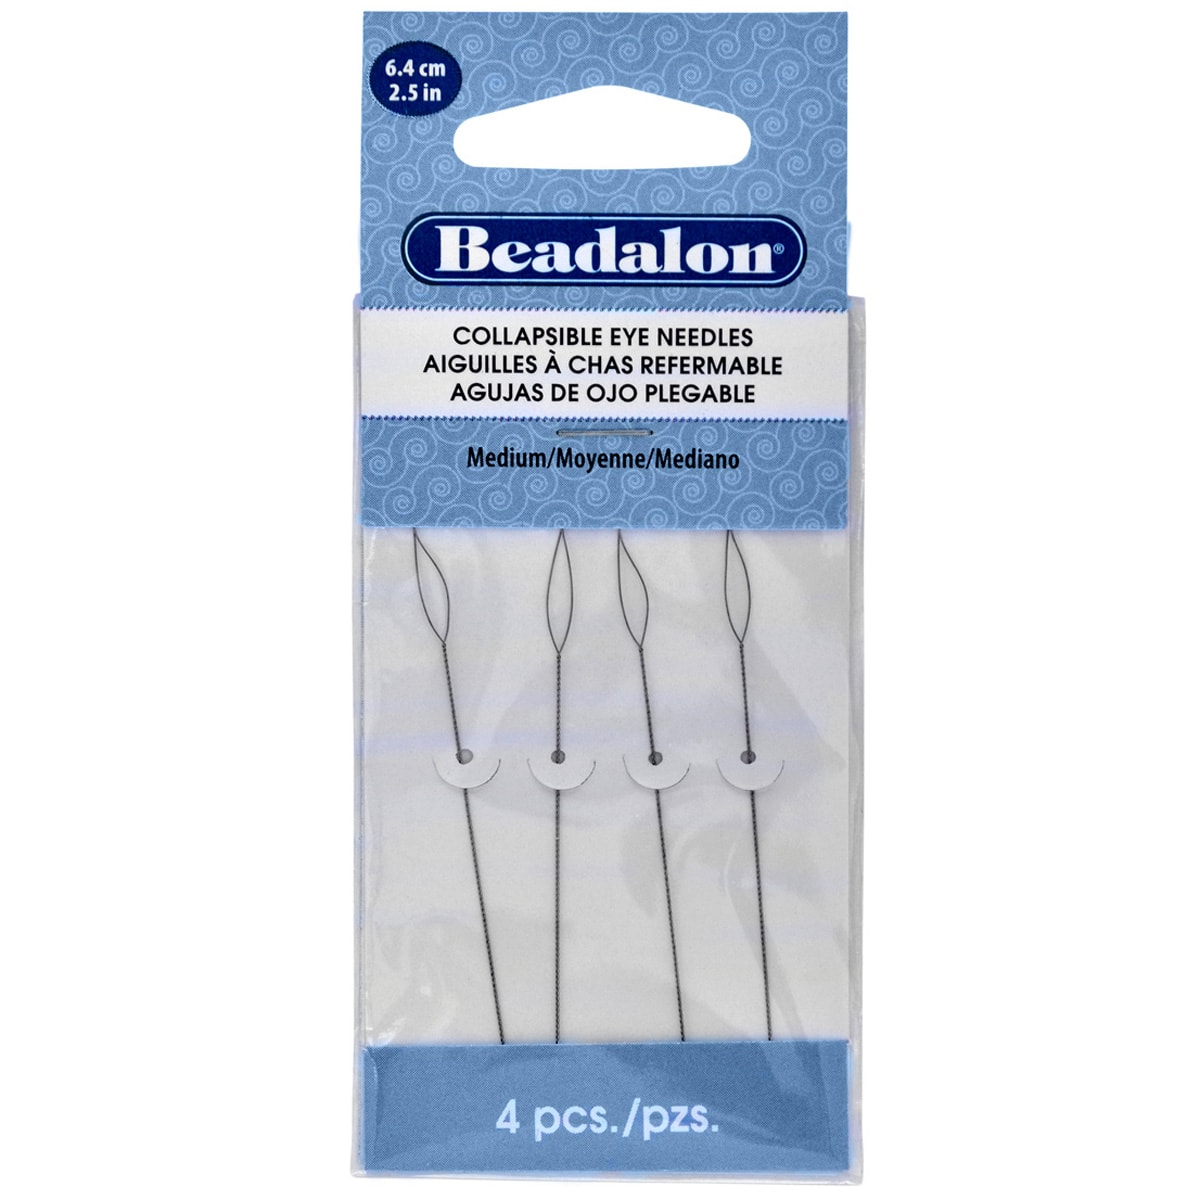 Beadalon Collapsible Eye Needles 2.5 4/Pkg Medium 